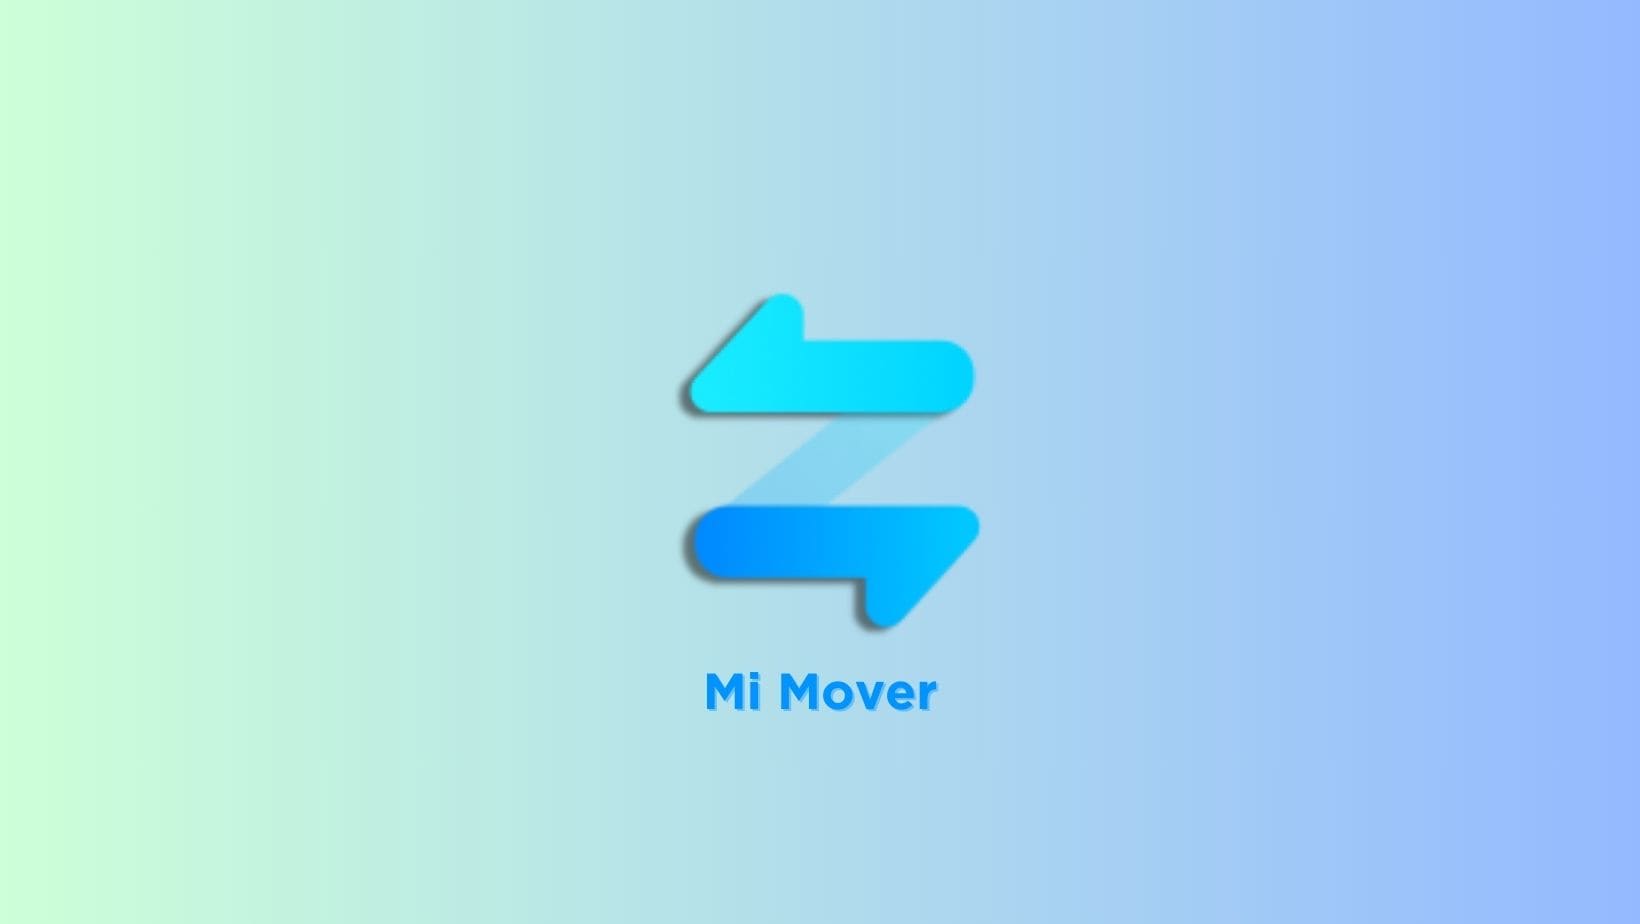 mi mover application